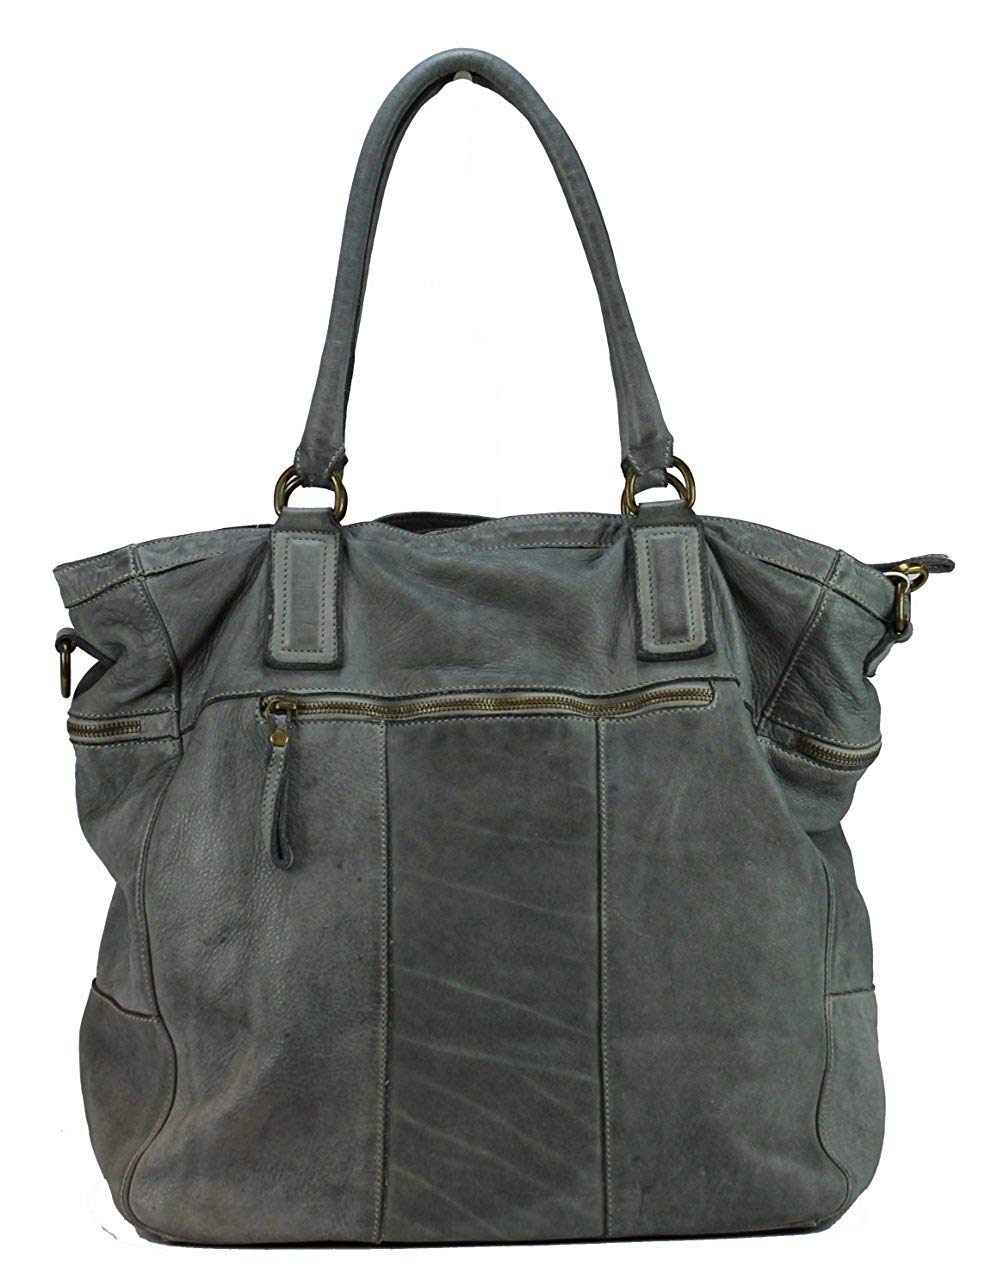 BZNA Bag Boney Grau grey Italy Designer Damen Handtasche Ledertasche Schultertasche Tasche Leder Shopper Neu